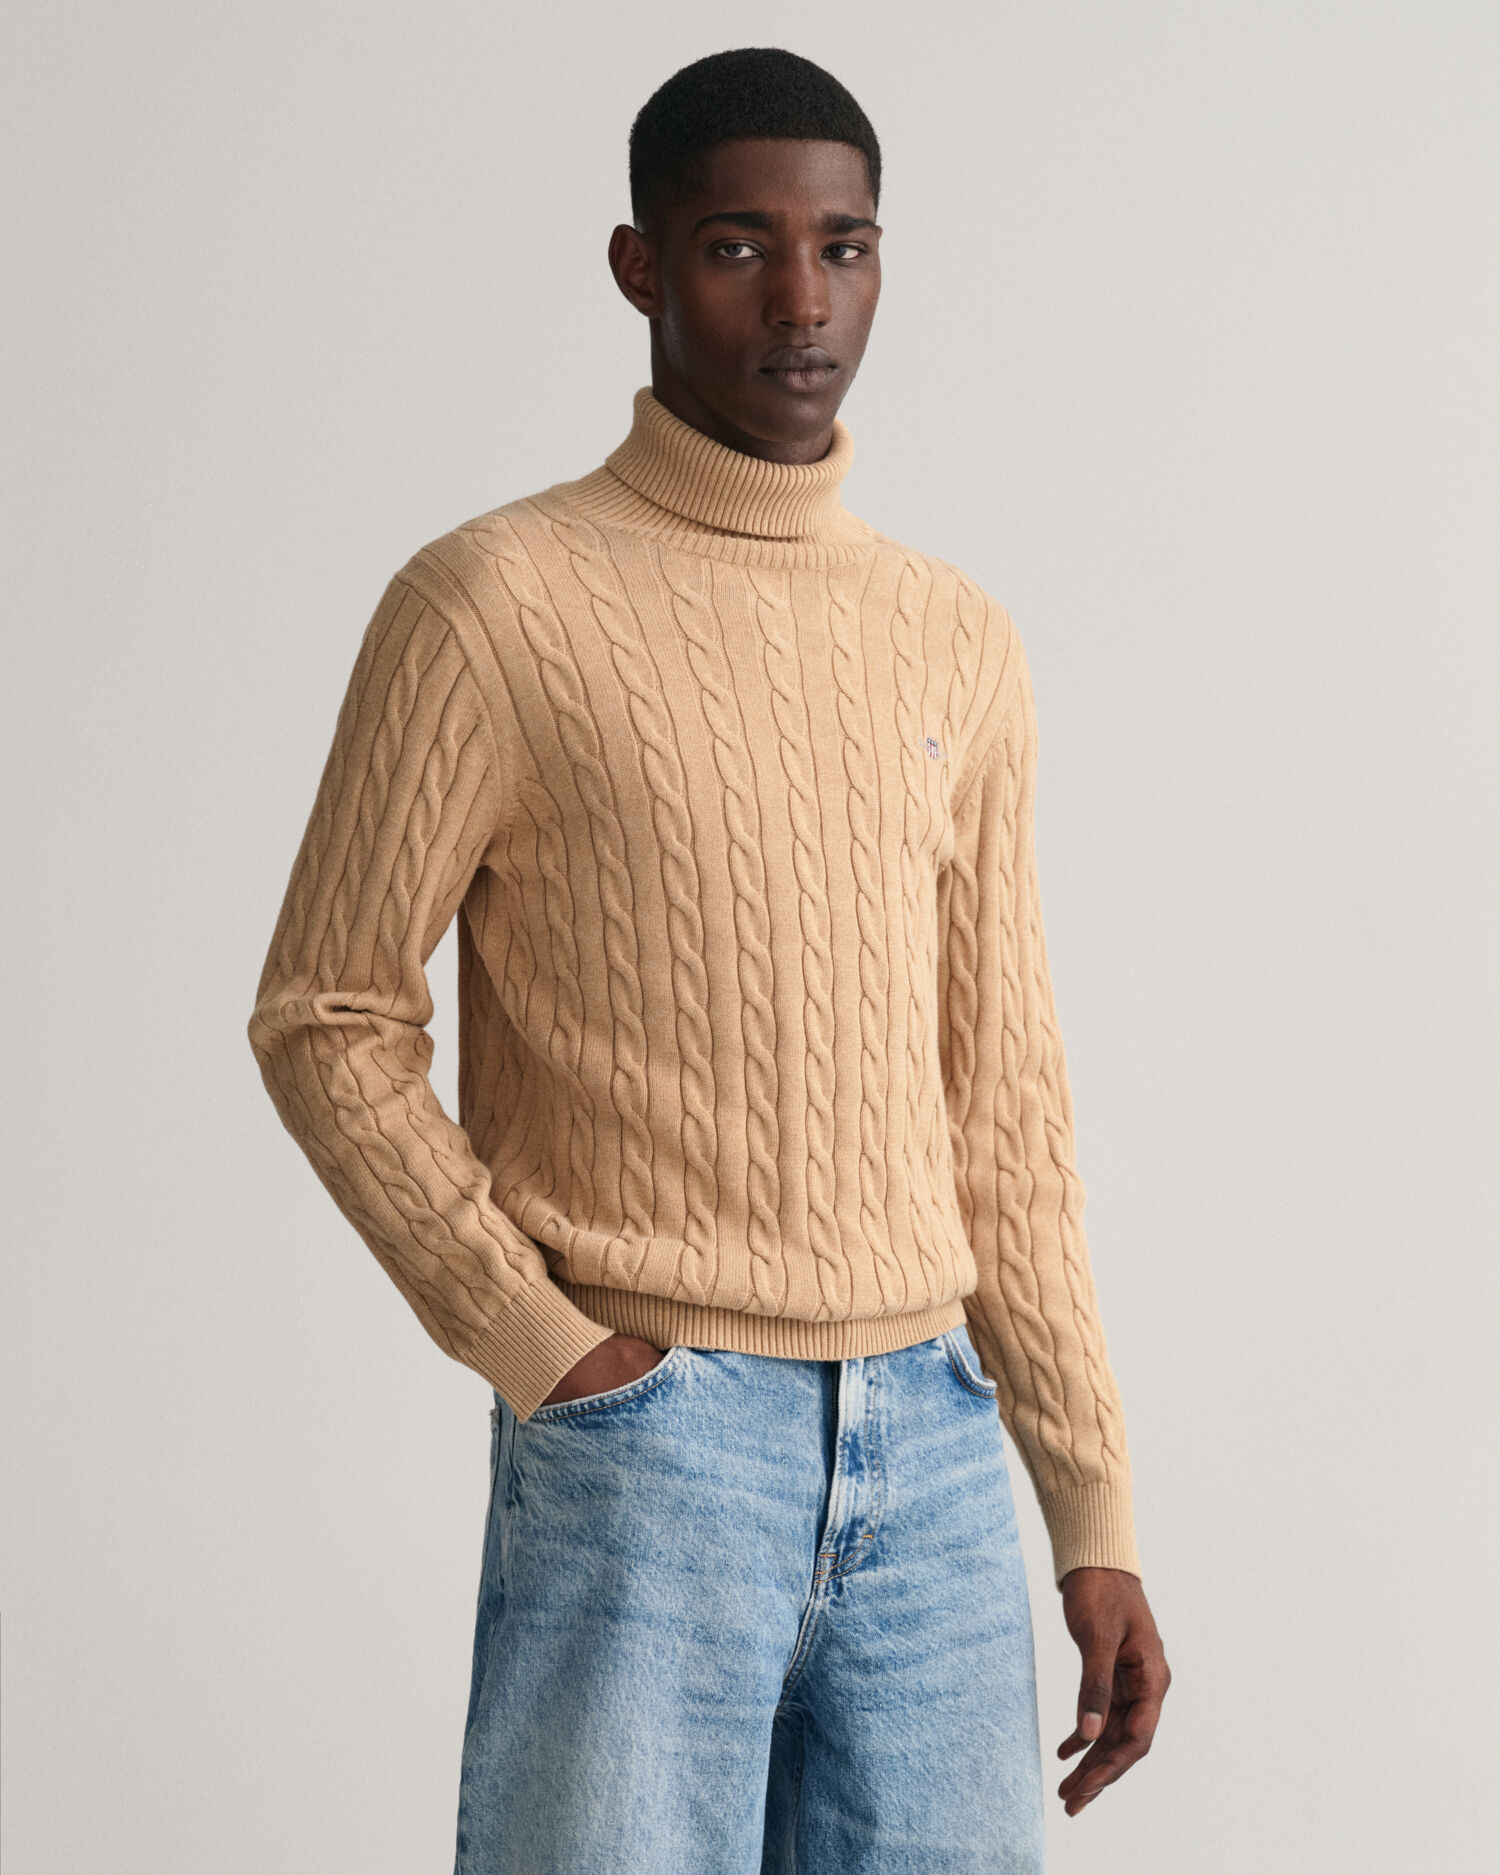 Cotton Cable Knit Turtleneck Sweater